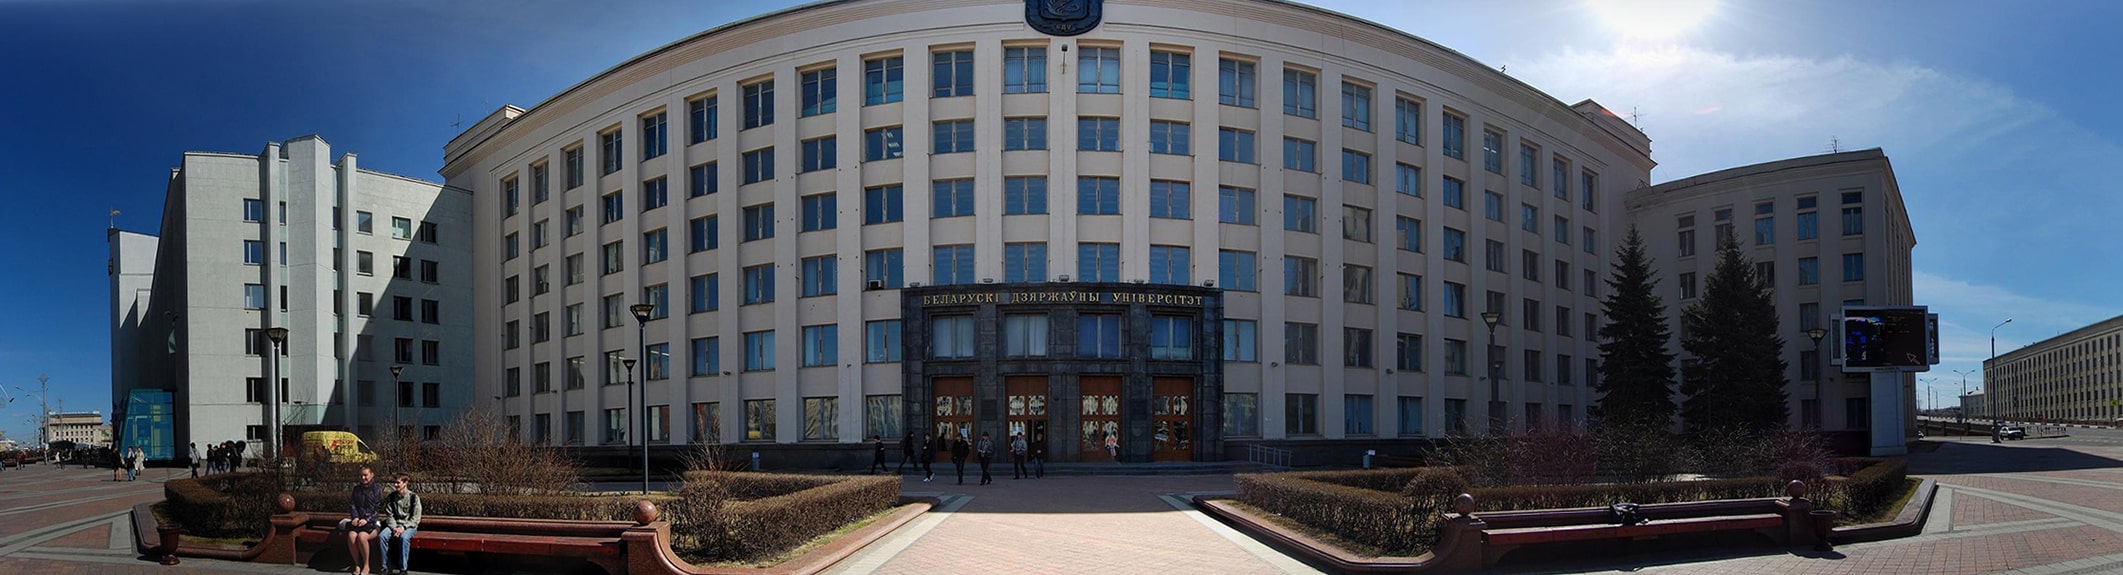 Belarusian State University the main image